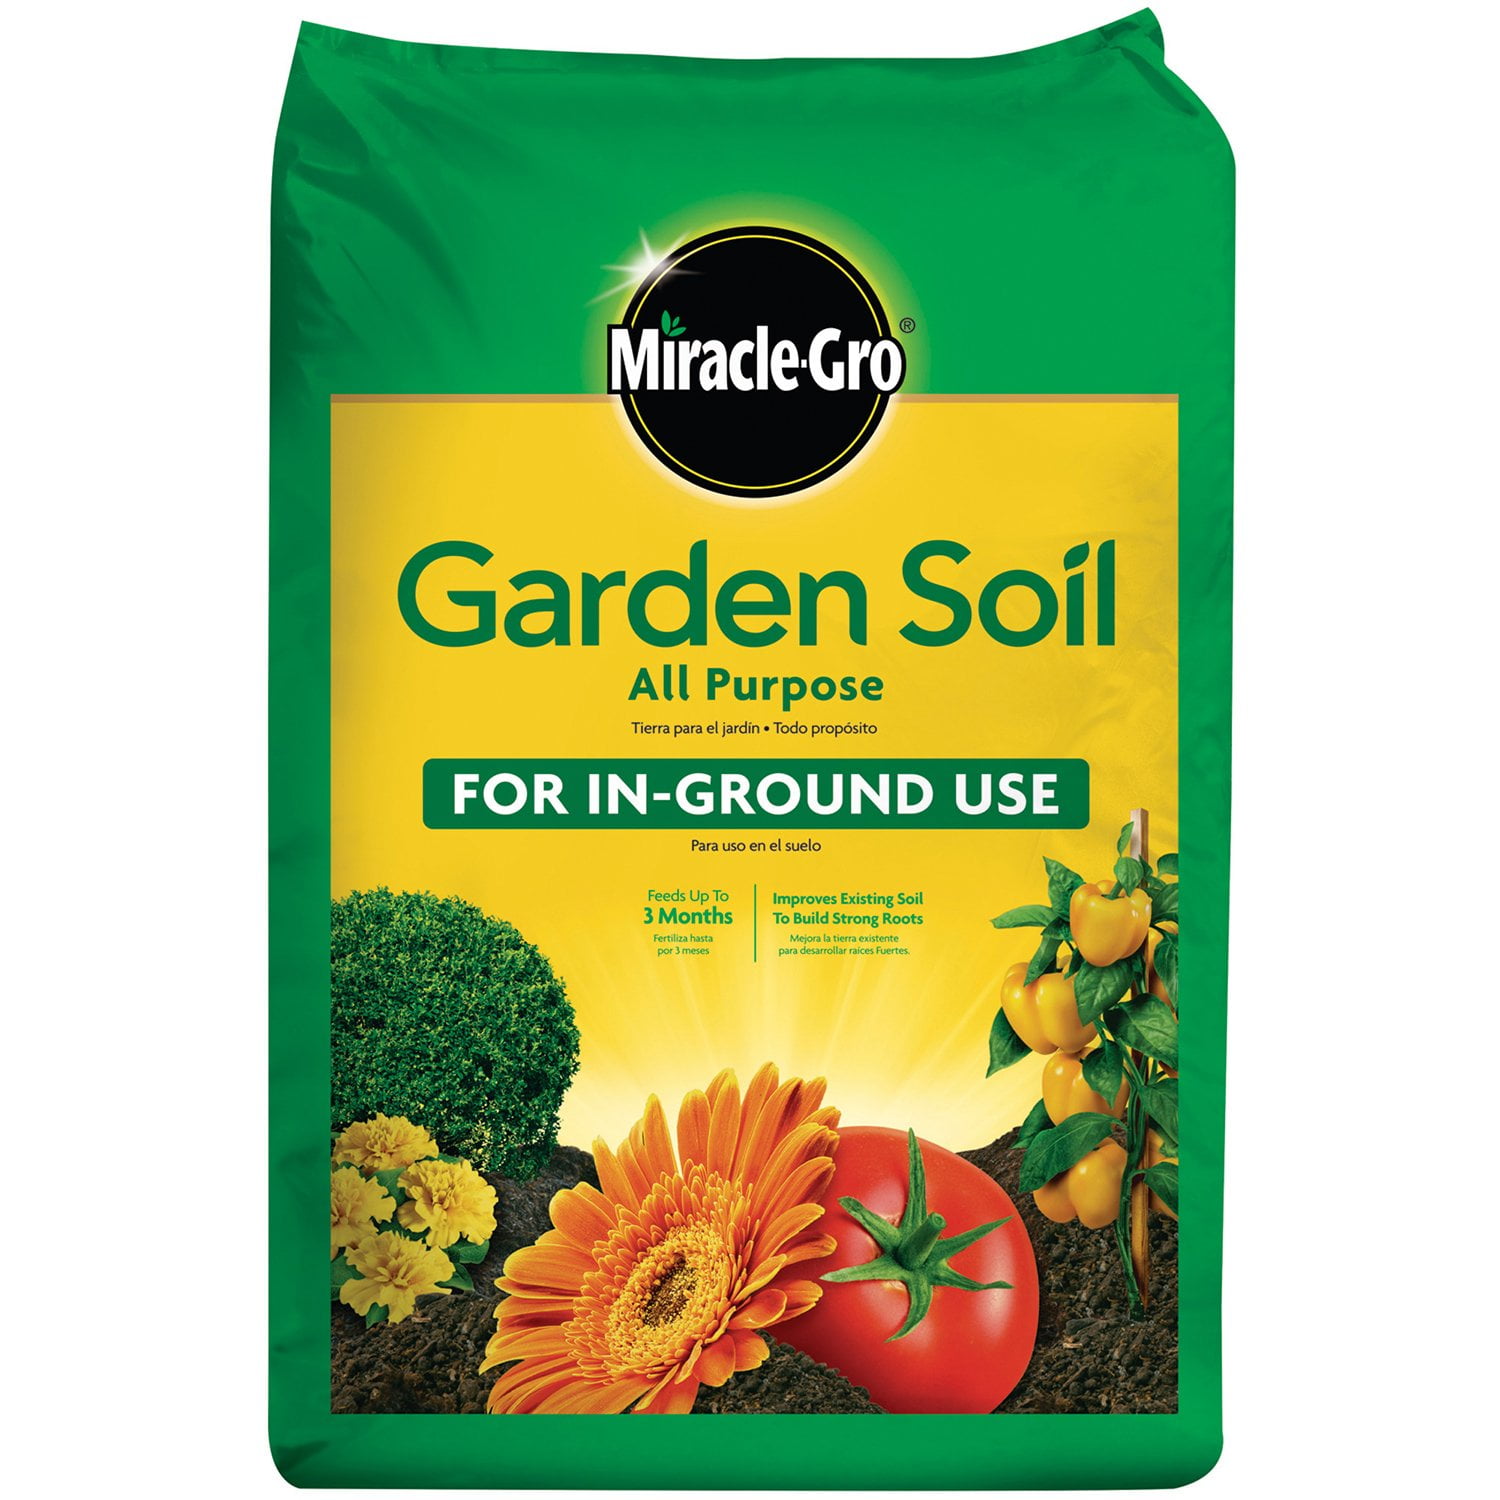 Is Miracle Gro Garden Soil Acidic